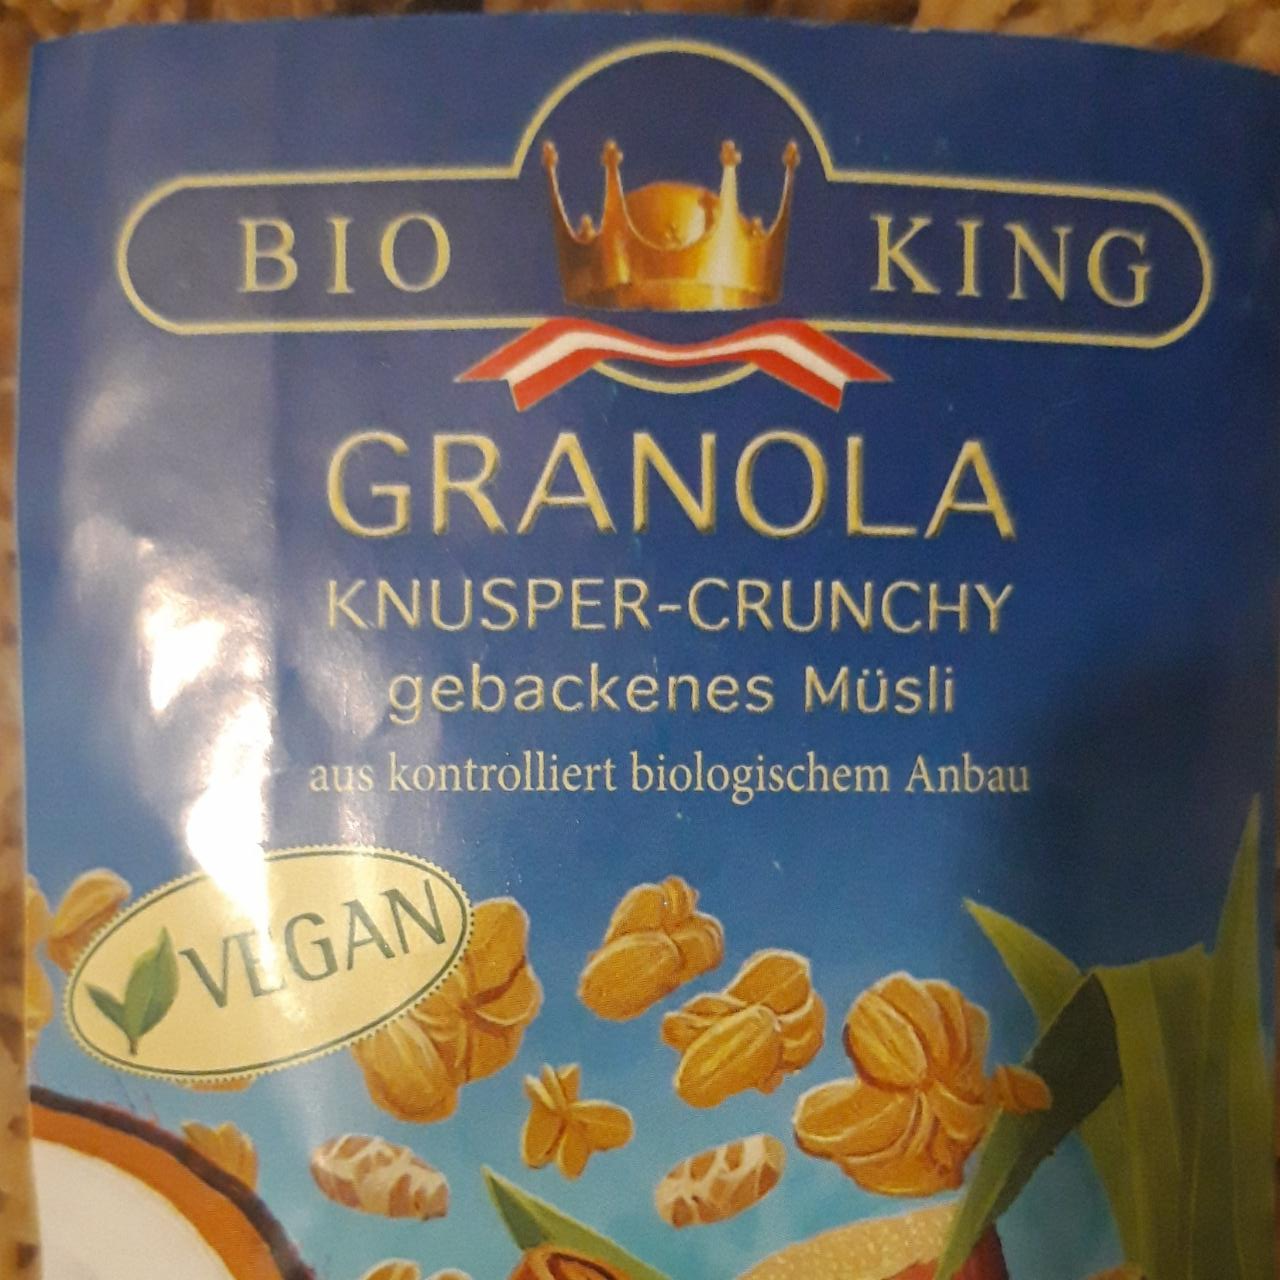 Képek - Granola vegan knusper crunchy Bio King